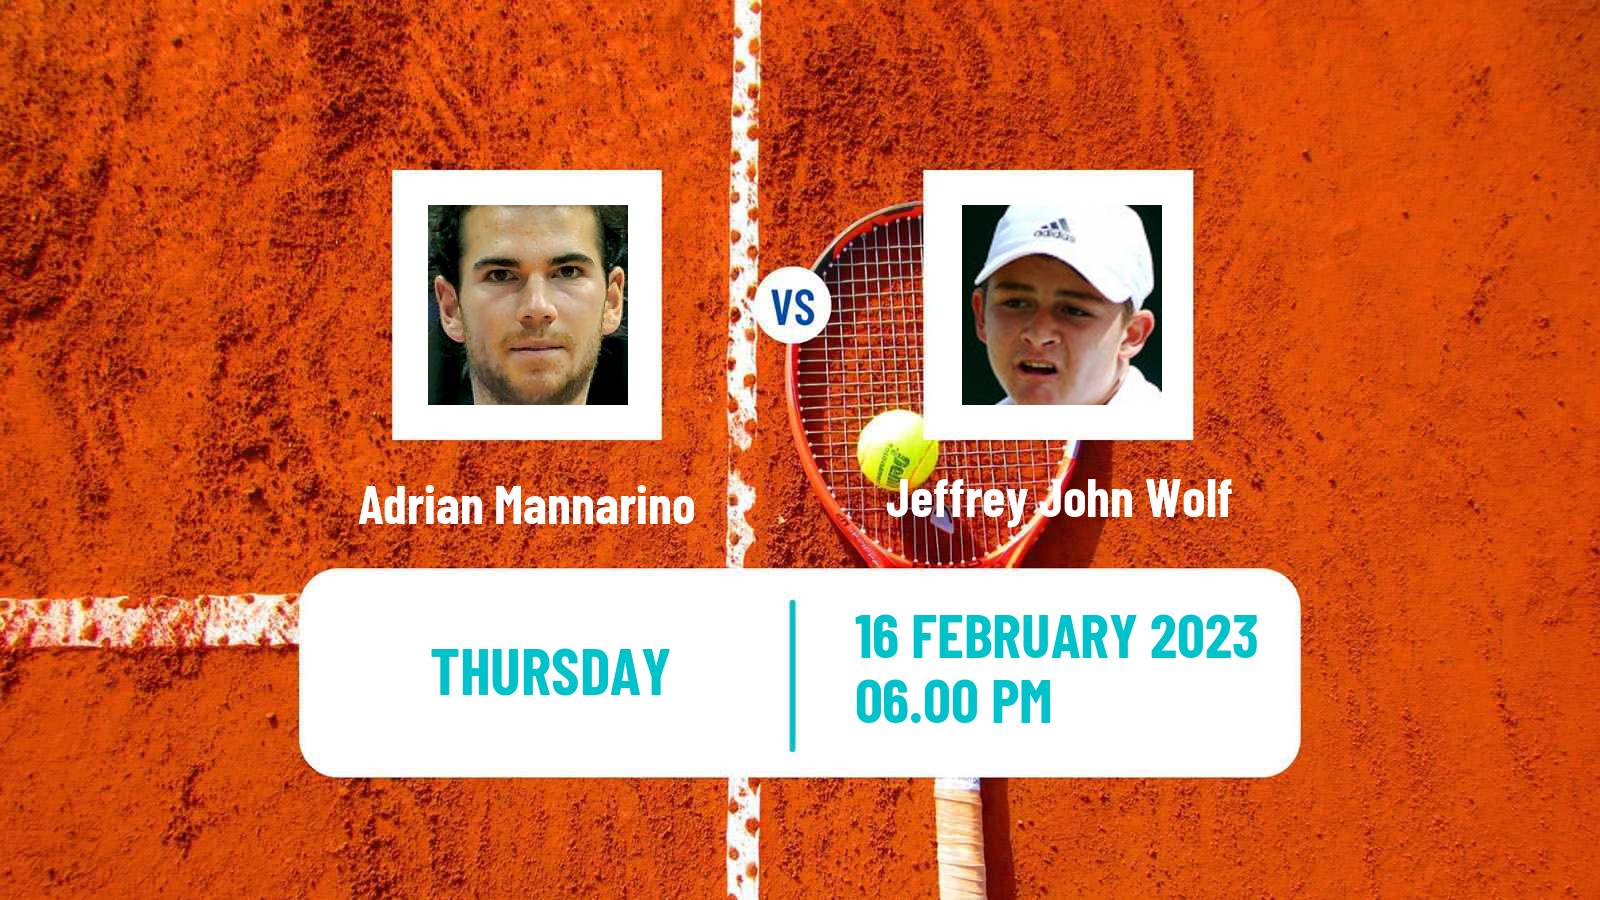 Tennis ATP Delray Beach Adrian Mannarino - Jeffrey John Wolf